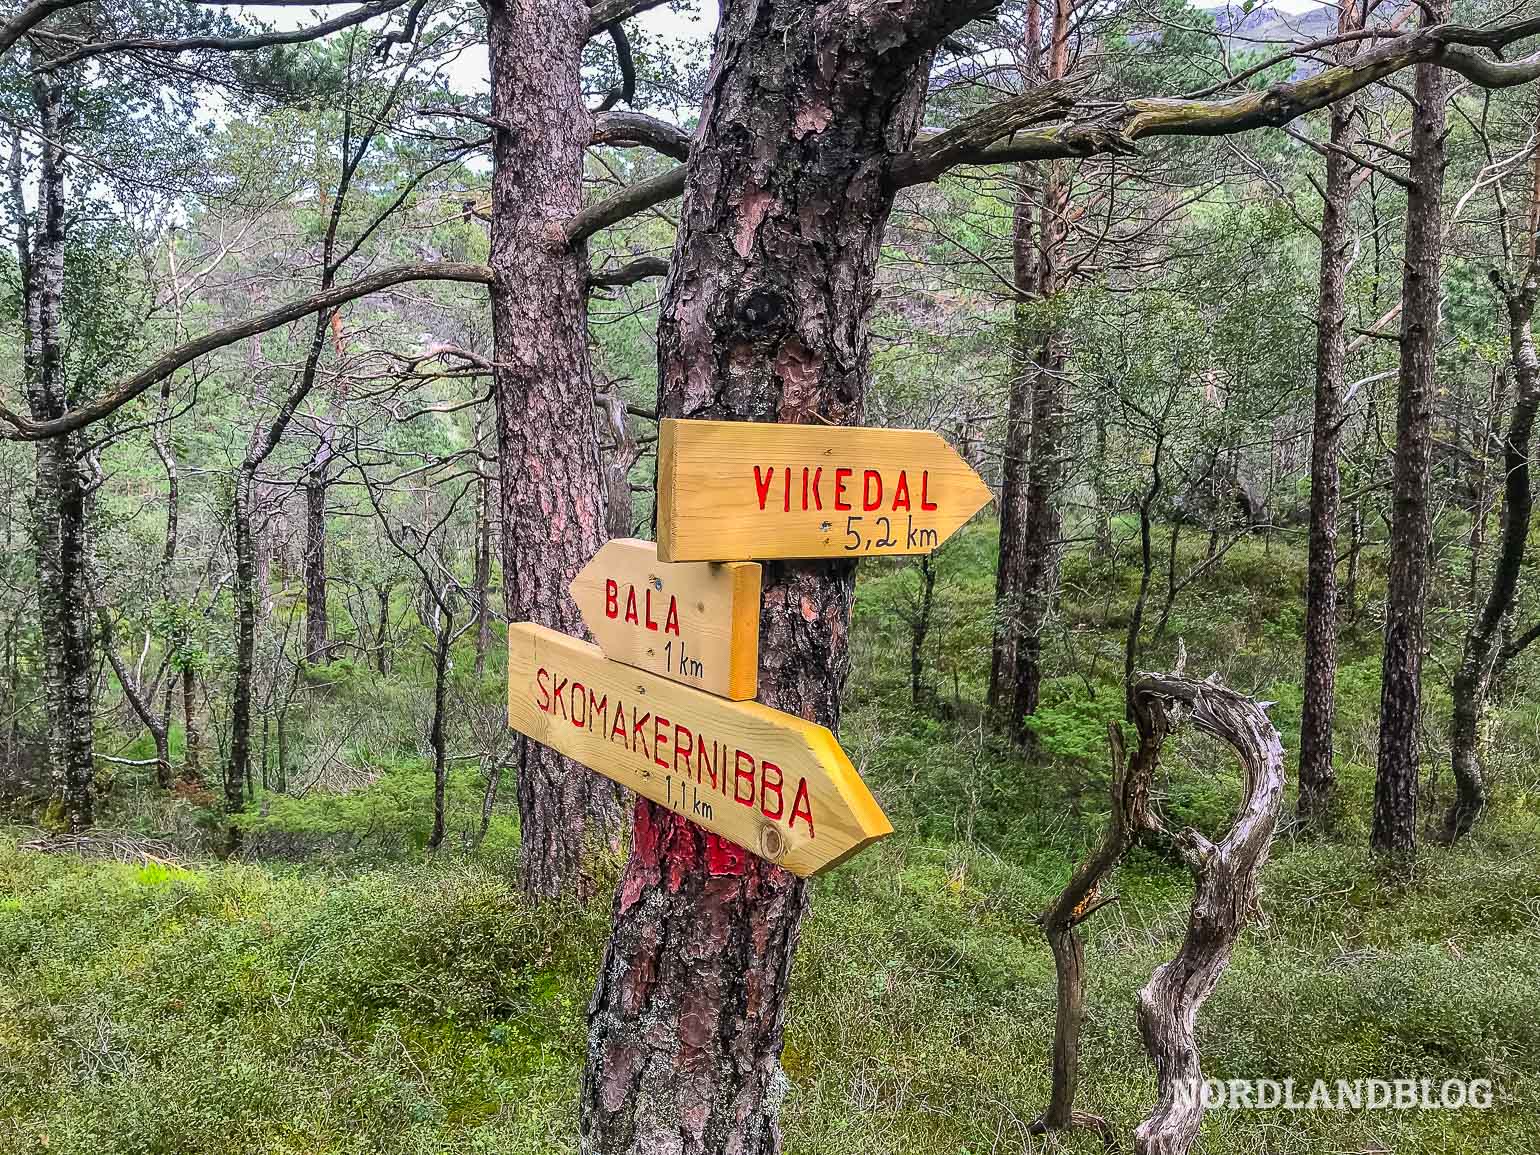 Wegweiser im Wald Vikedal Norwegen Nordlandblog